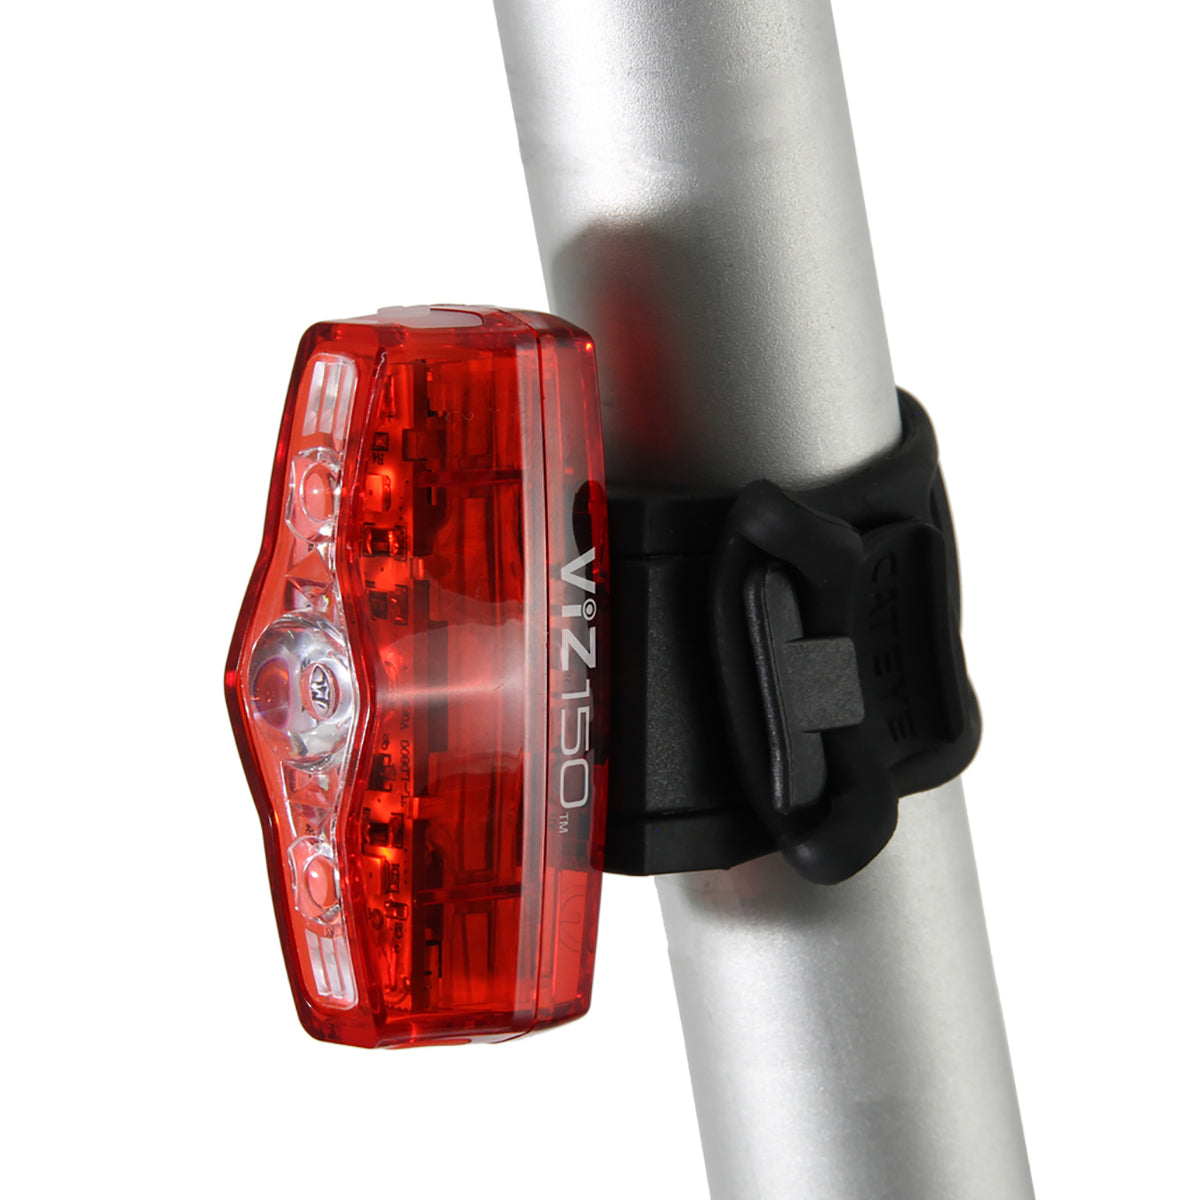 CatEye ViZ150 Wireless Rechargeable Rear Safety Light Cateye